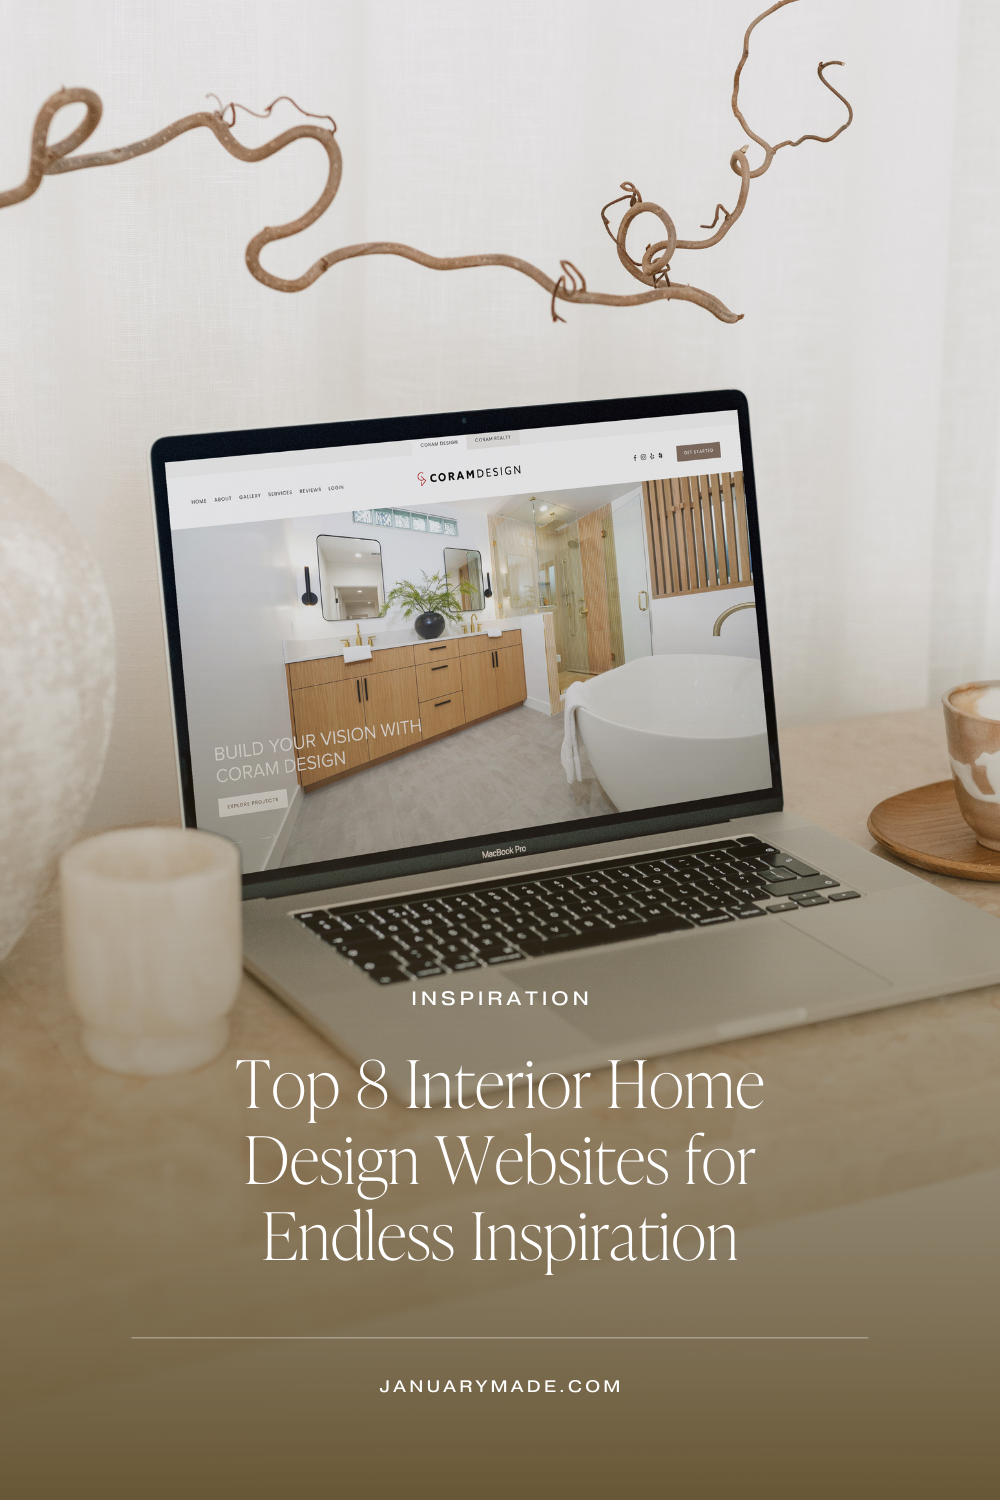 Top 8 Interior Home Design Websites for Endless Inspiration